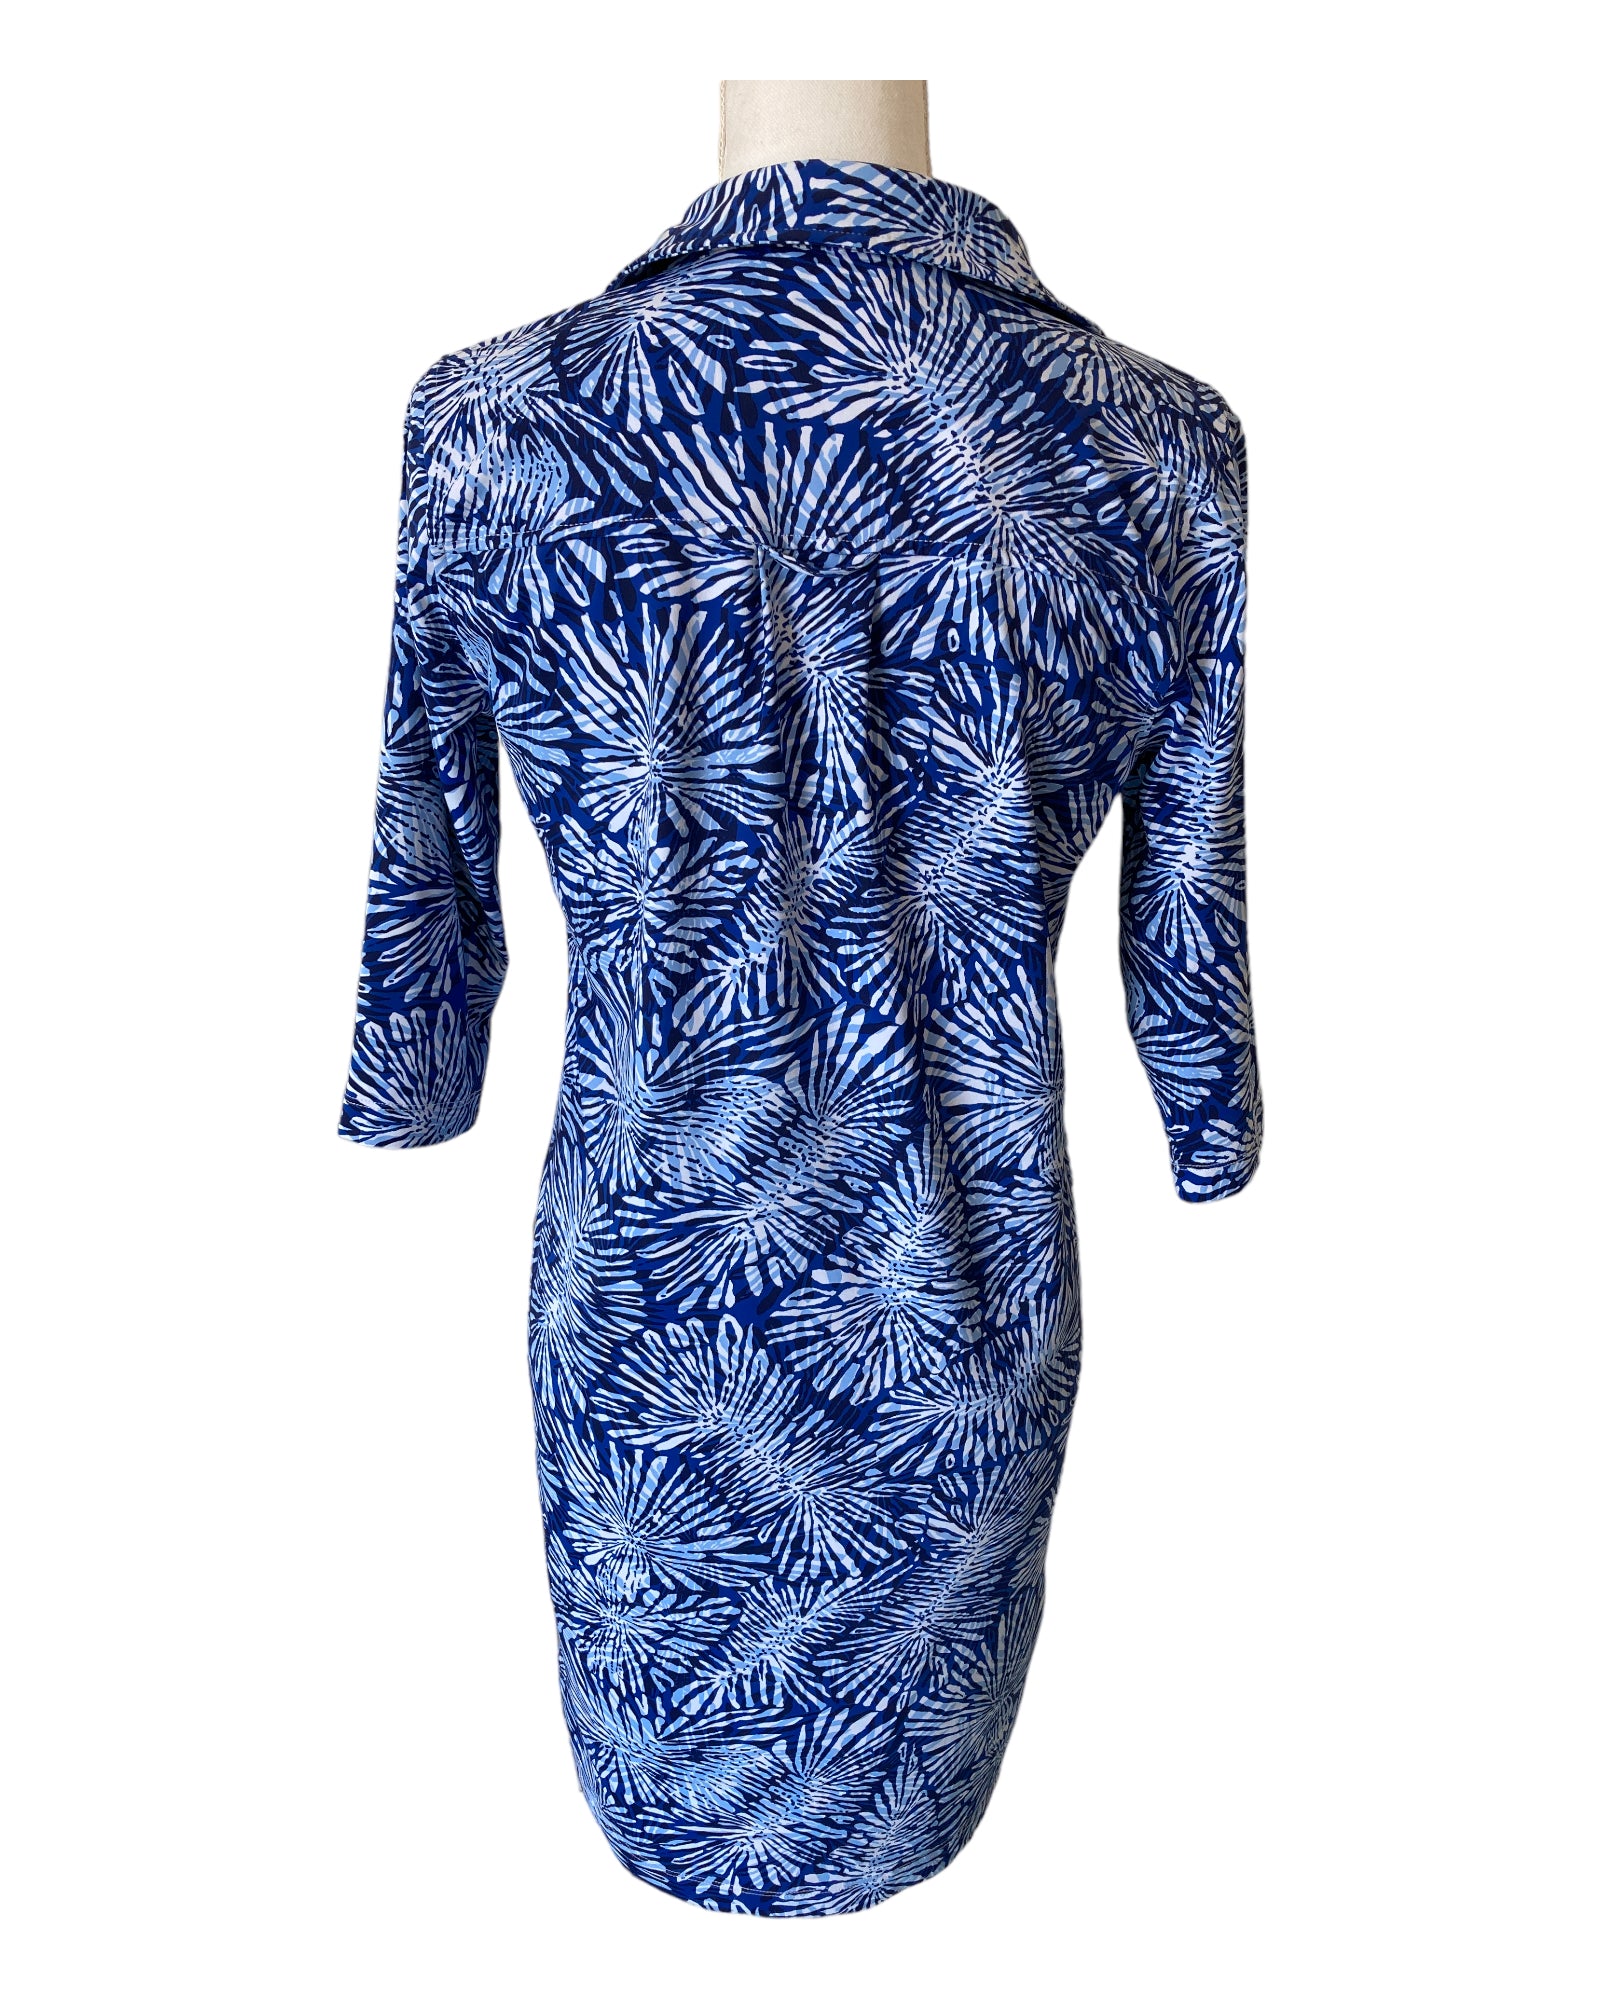 Persifor Blue Print Winpenny Dress, S